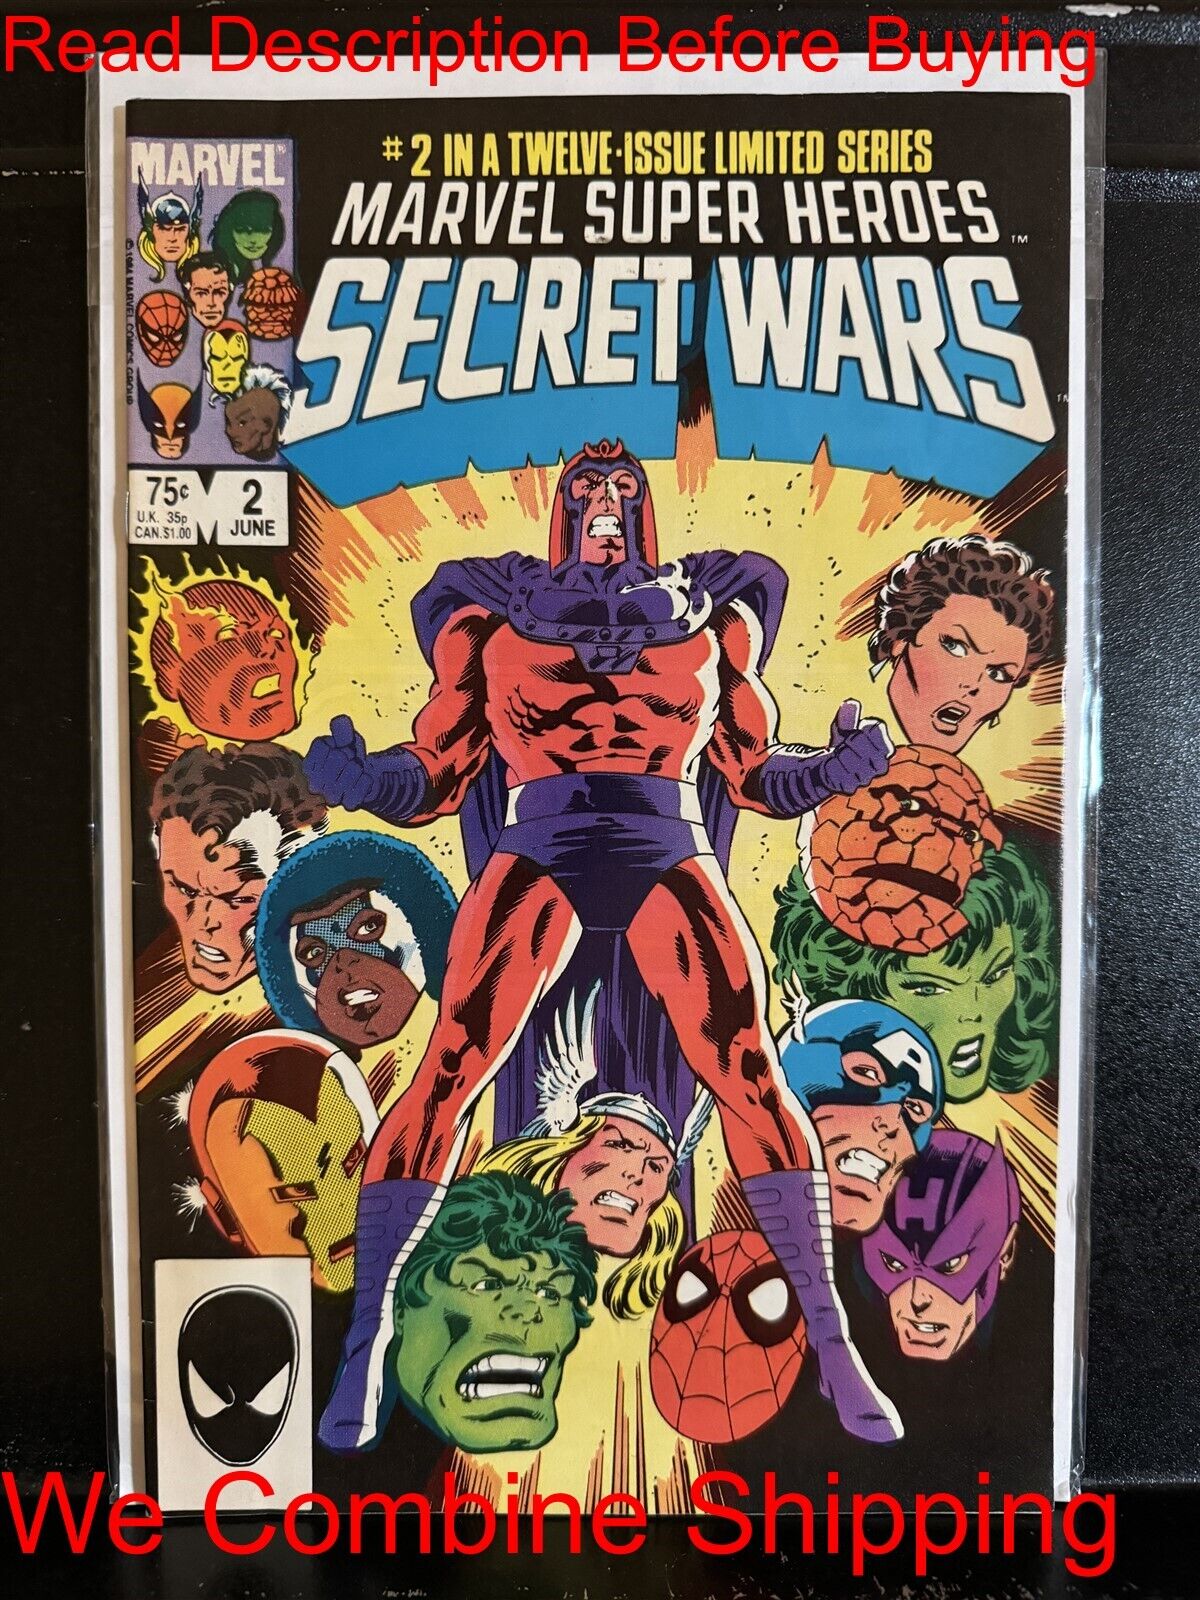 BARGAIN BOOKS ($5 MIN PURCHASE) Marvel Super-Heroes Secret Wars #2 1984 